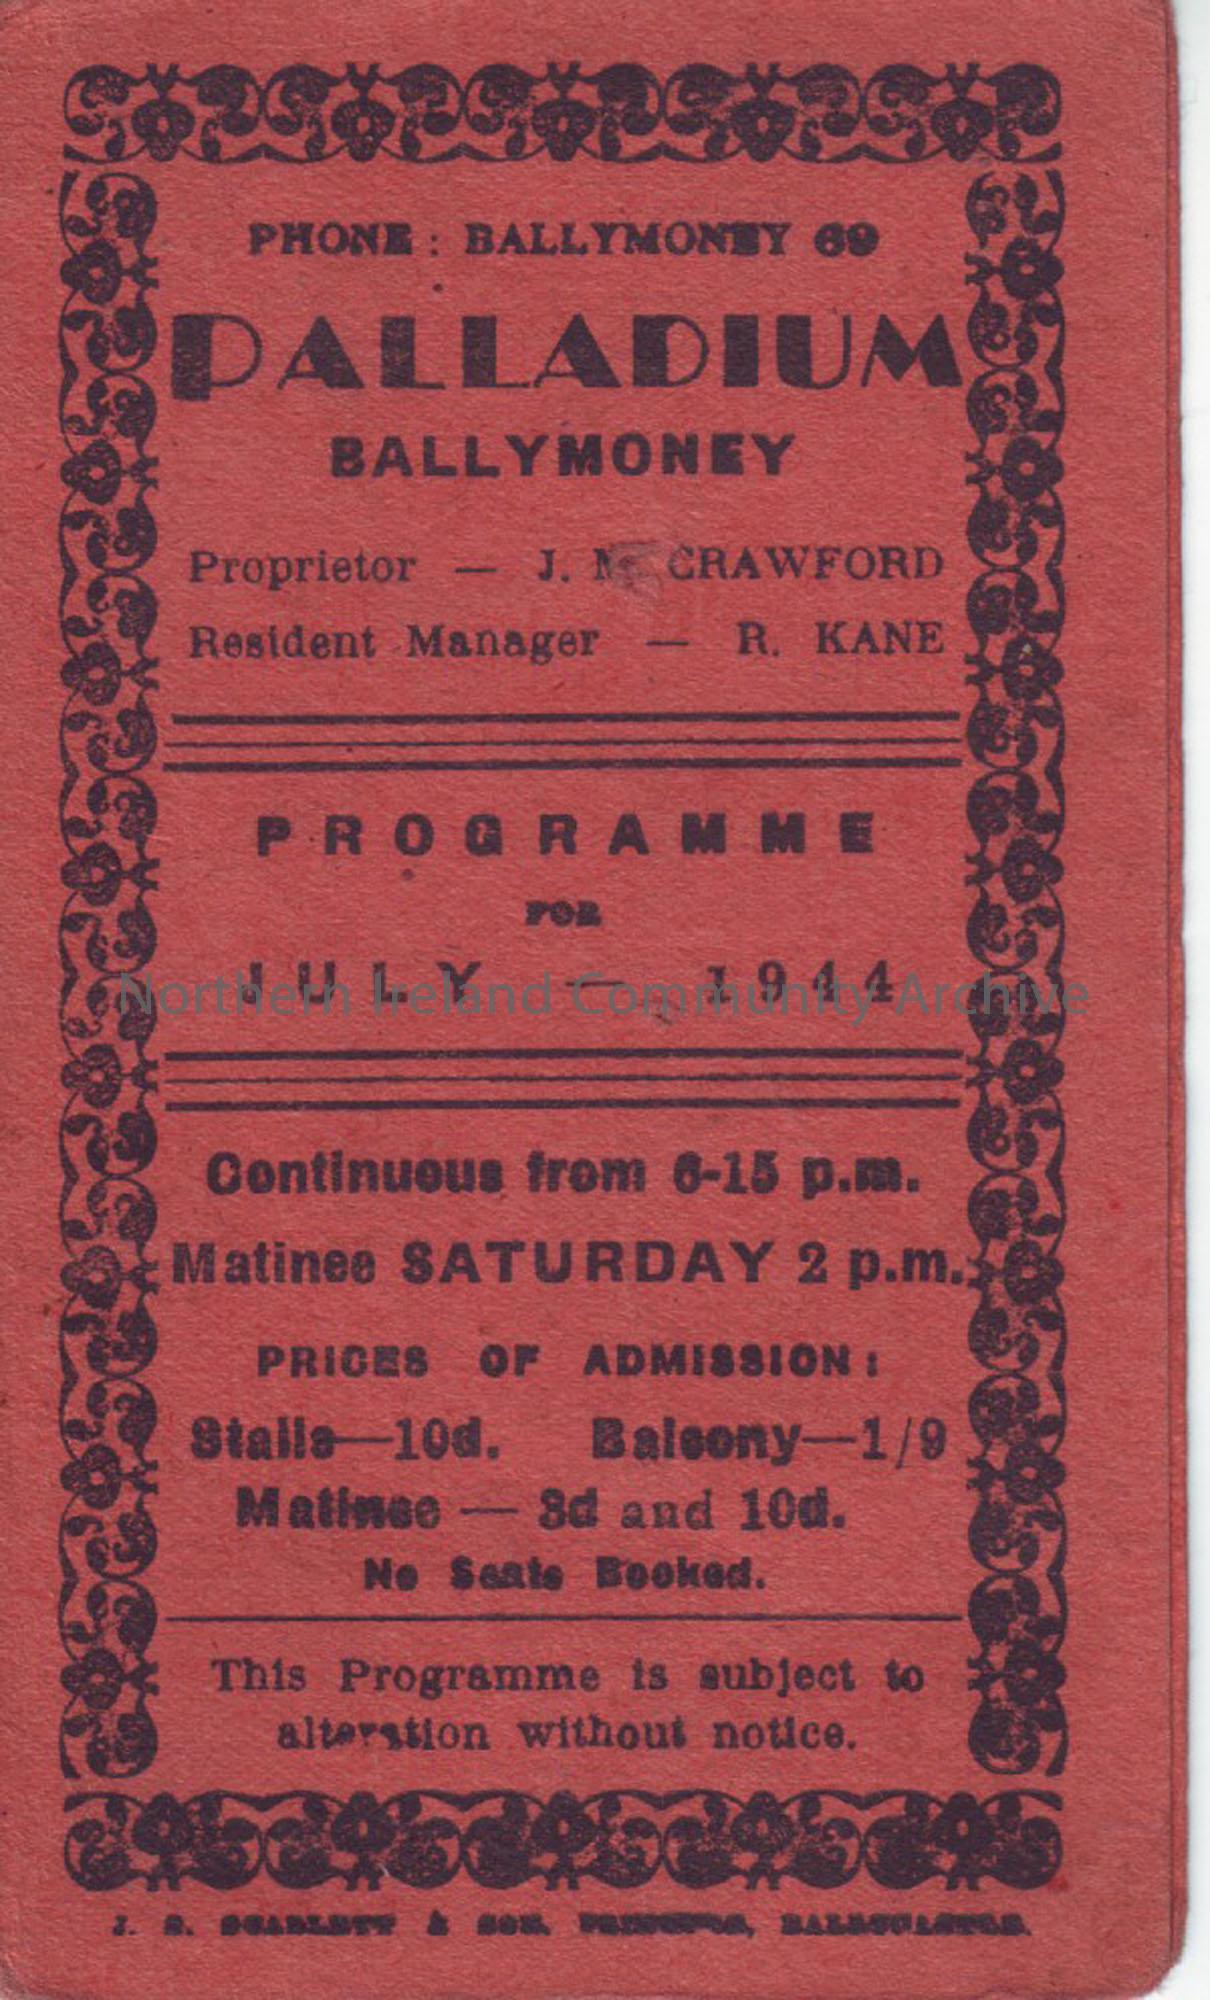 red programme for Ballymoney Palladium cinema- July 1944